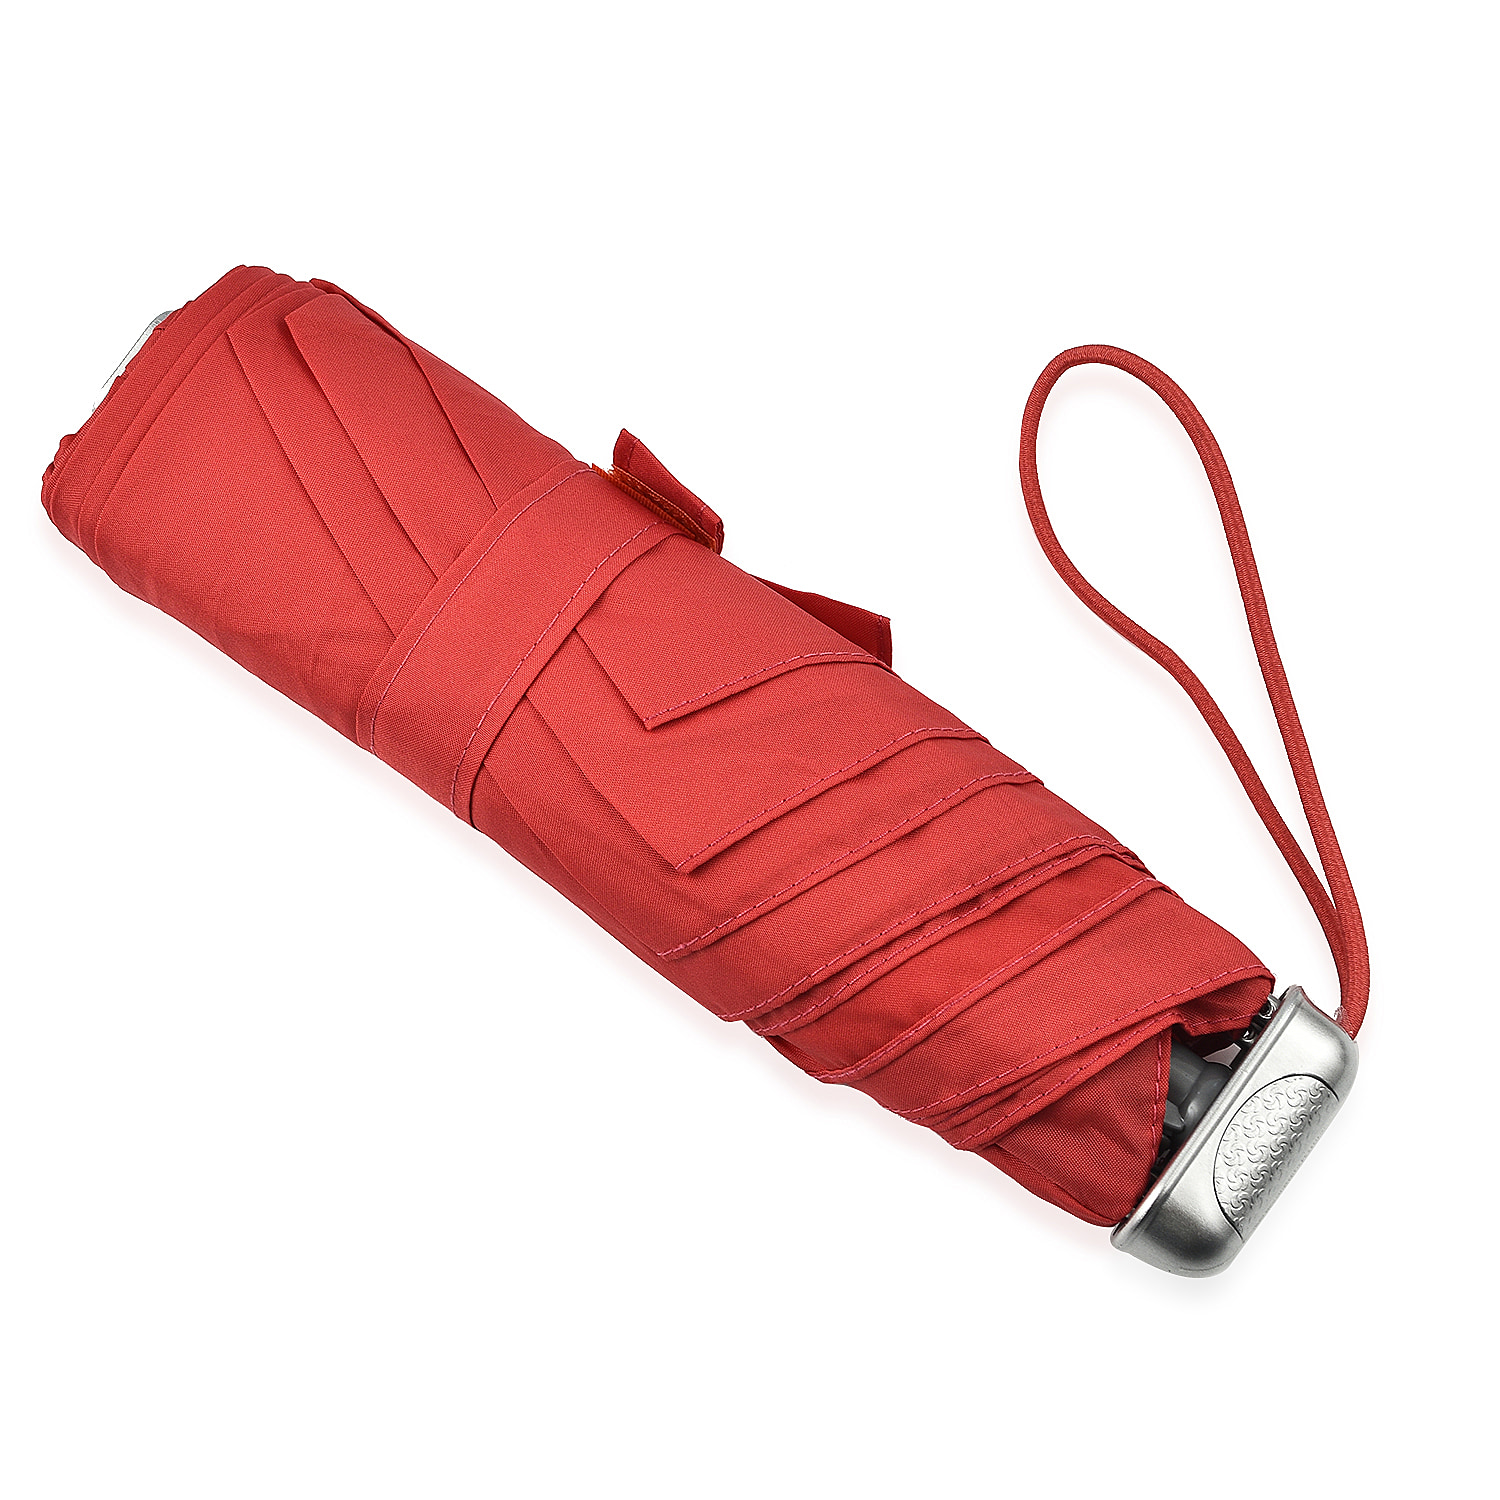 Samsonite Foldable Umbrella with Fabric Bag - Coral